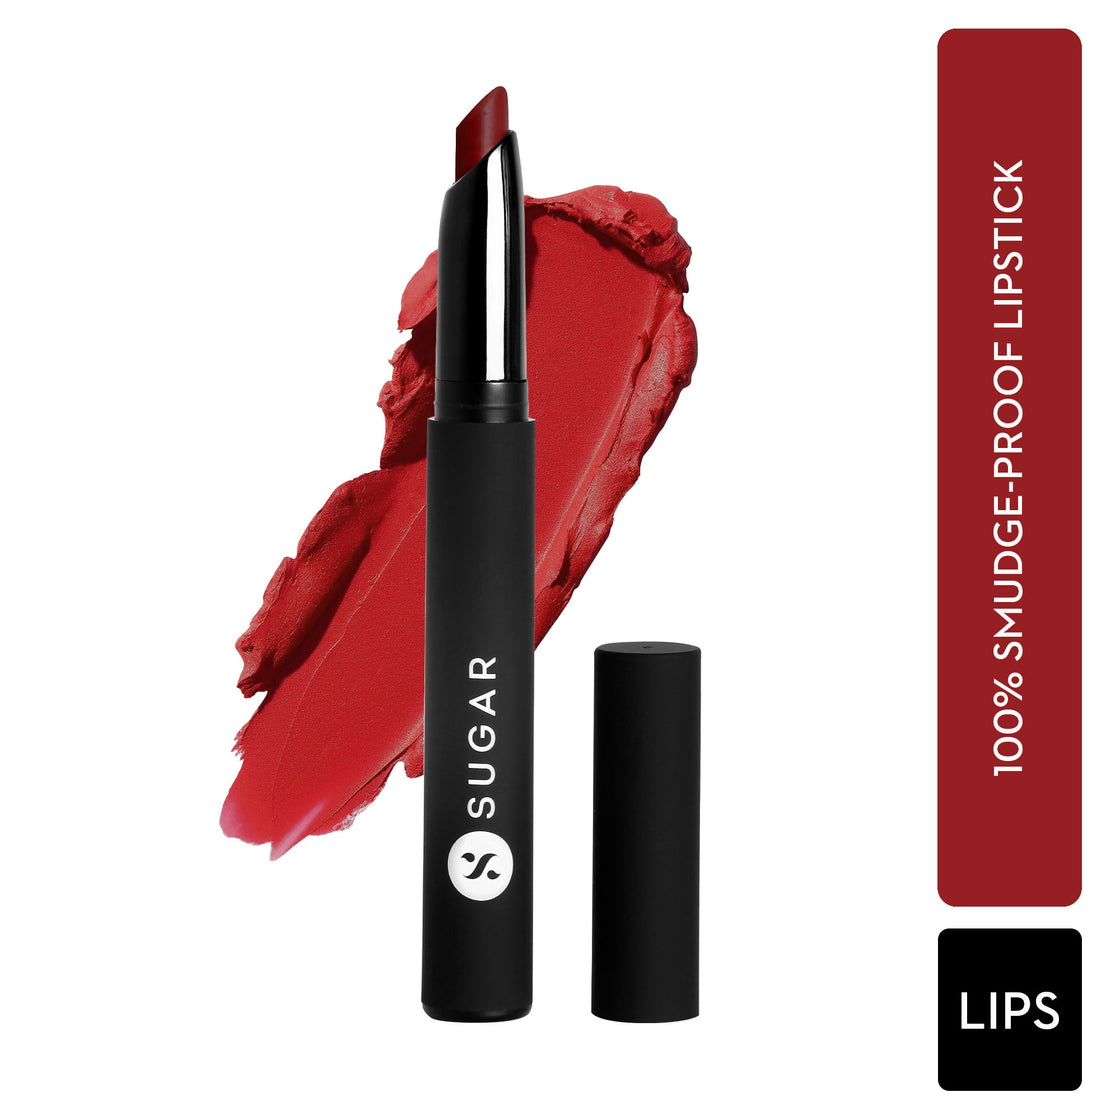 SUGAR Matte Attack Transferproof Lipstick - 06 Spring Crimson (Crimson Red) (2g)